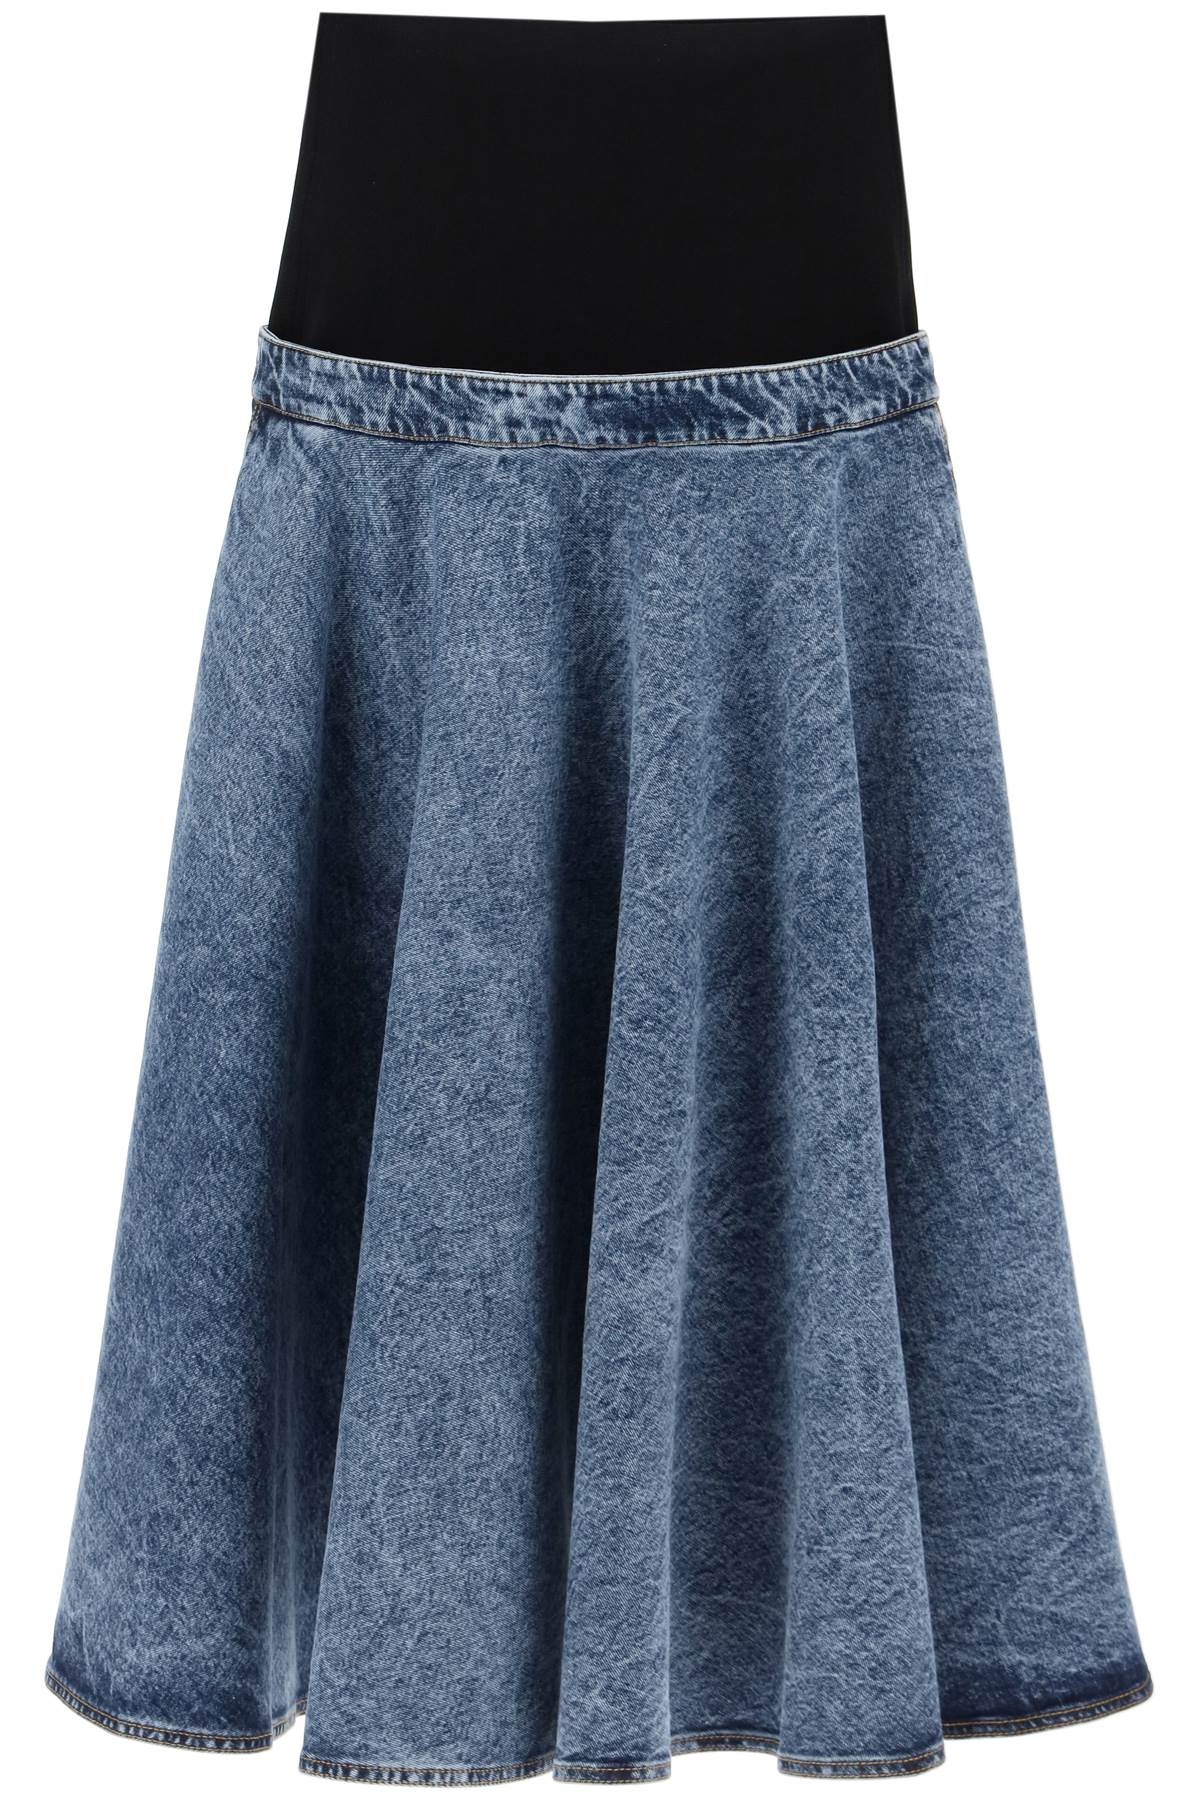 Alaïa Denim Skirt With Ruffle Hem In Blue